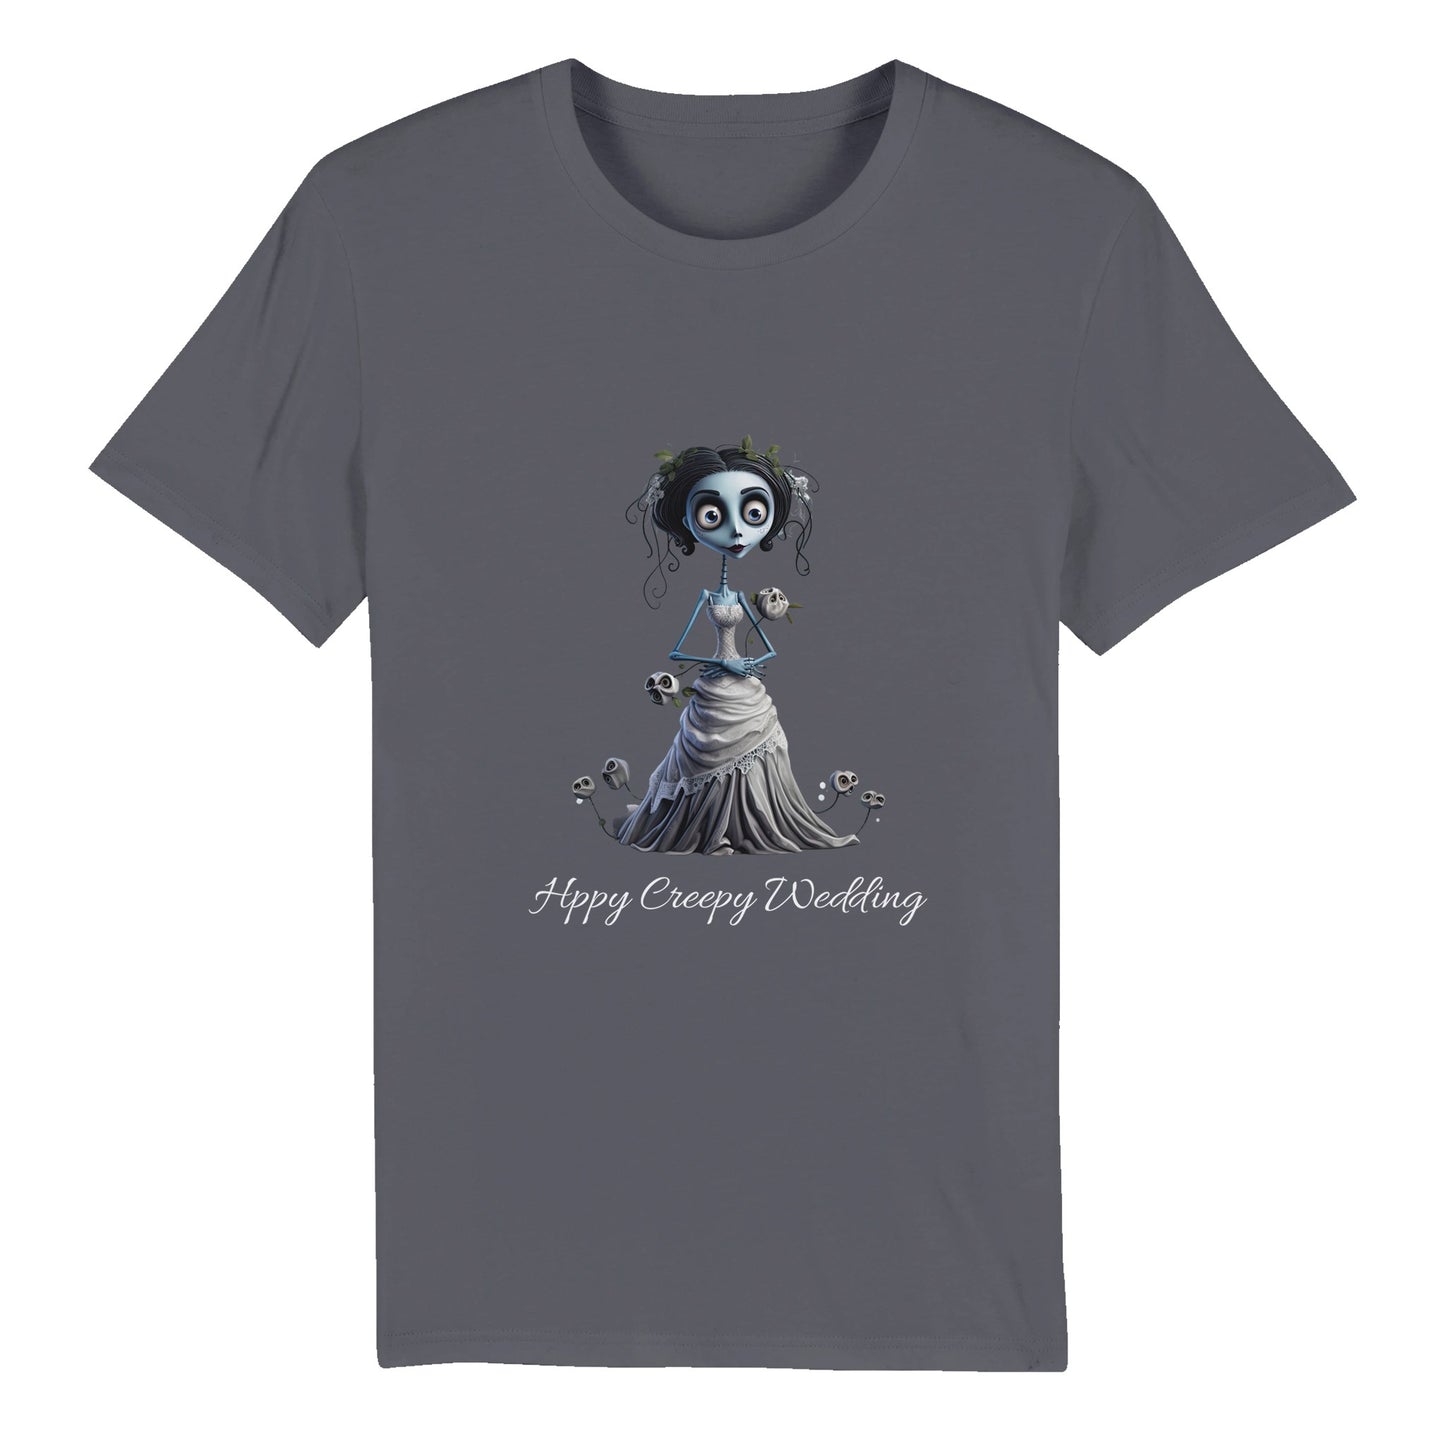 100% Organic Unisex T-shirt/Happy-Creepy-Wedding